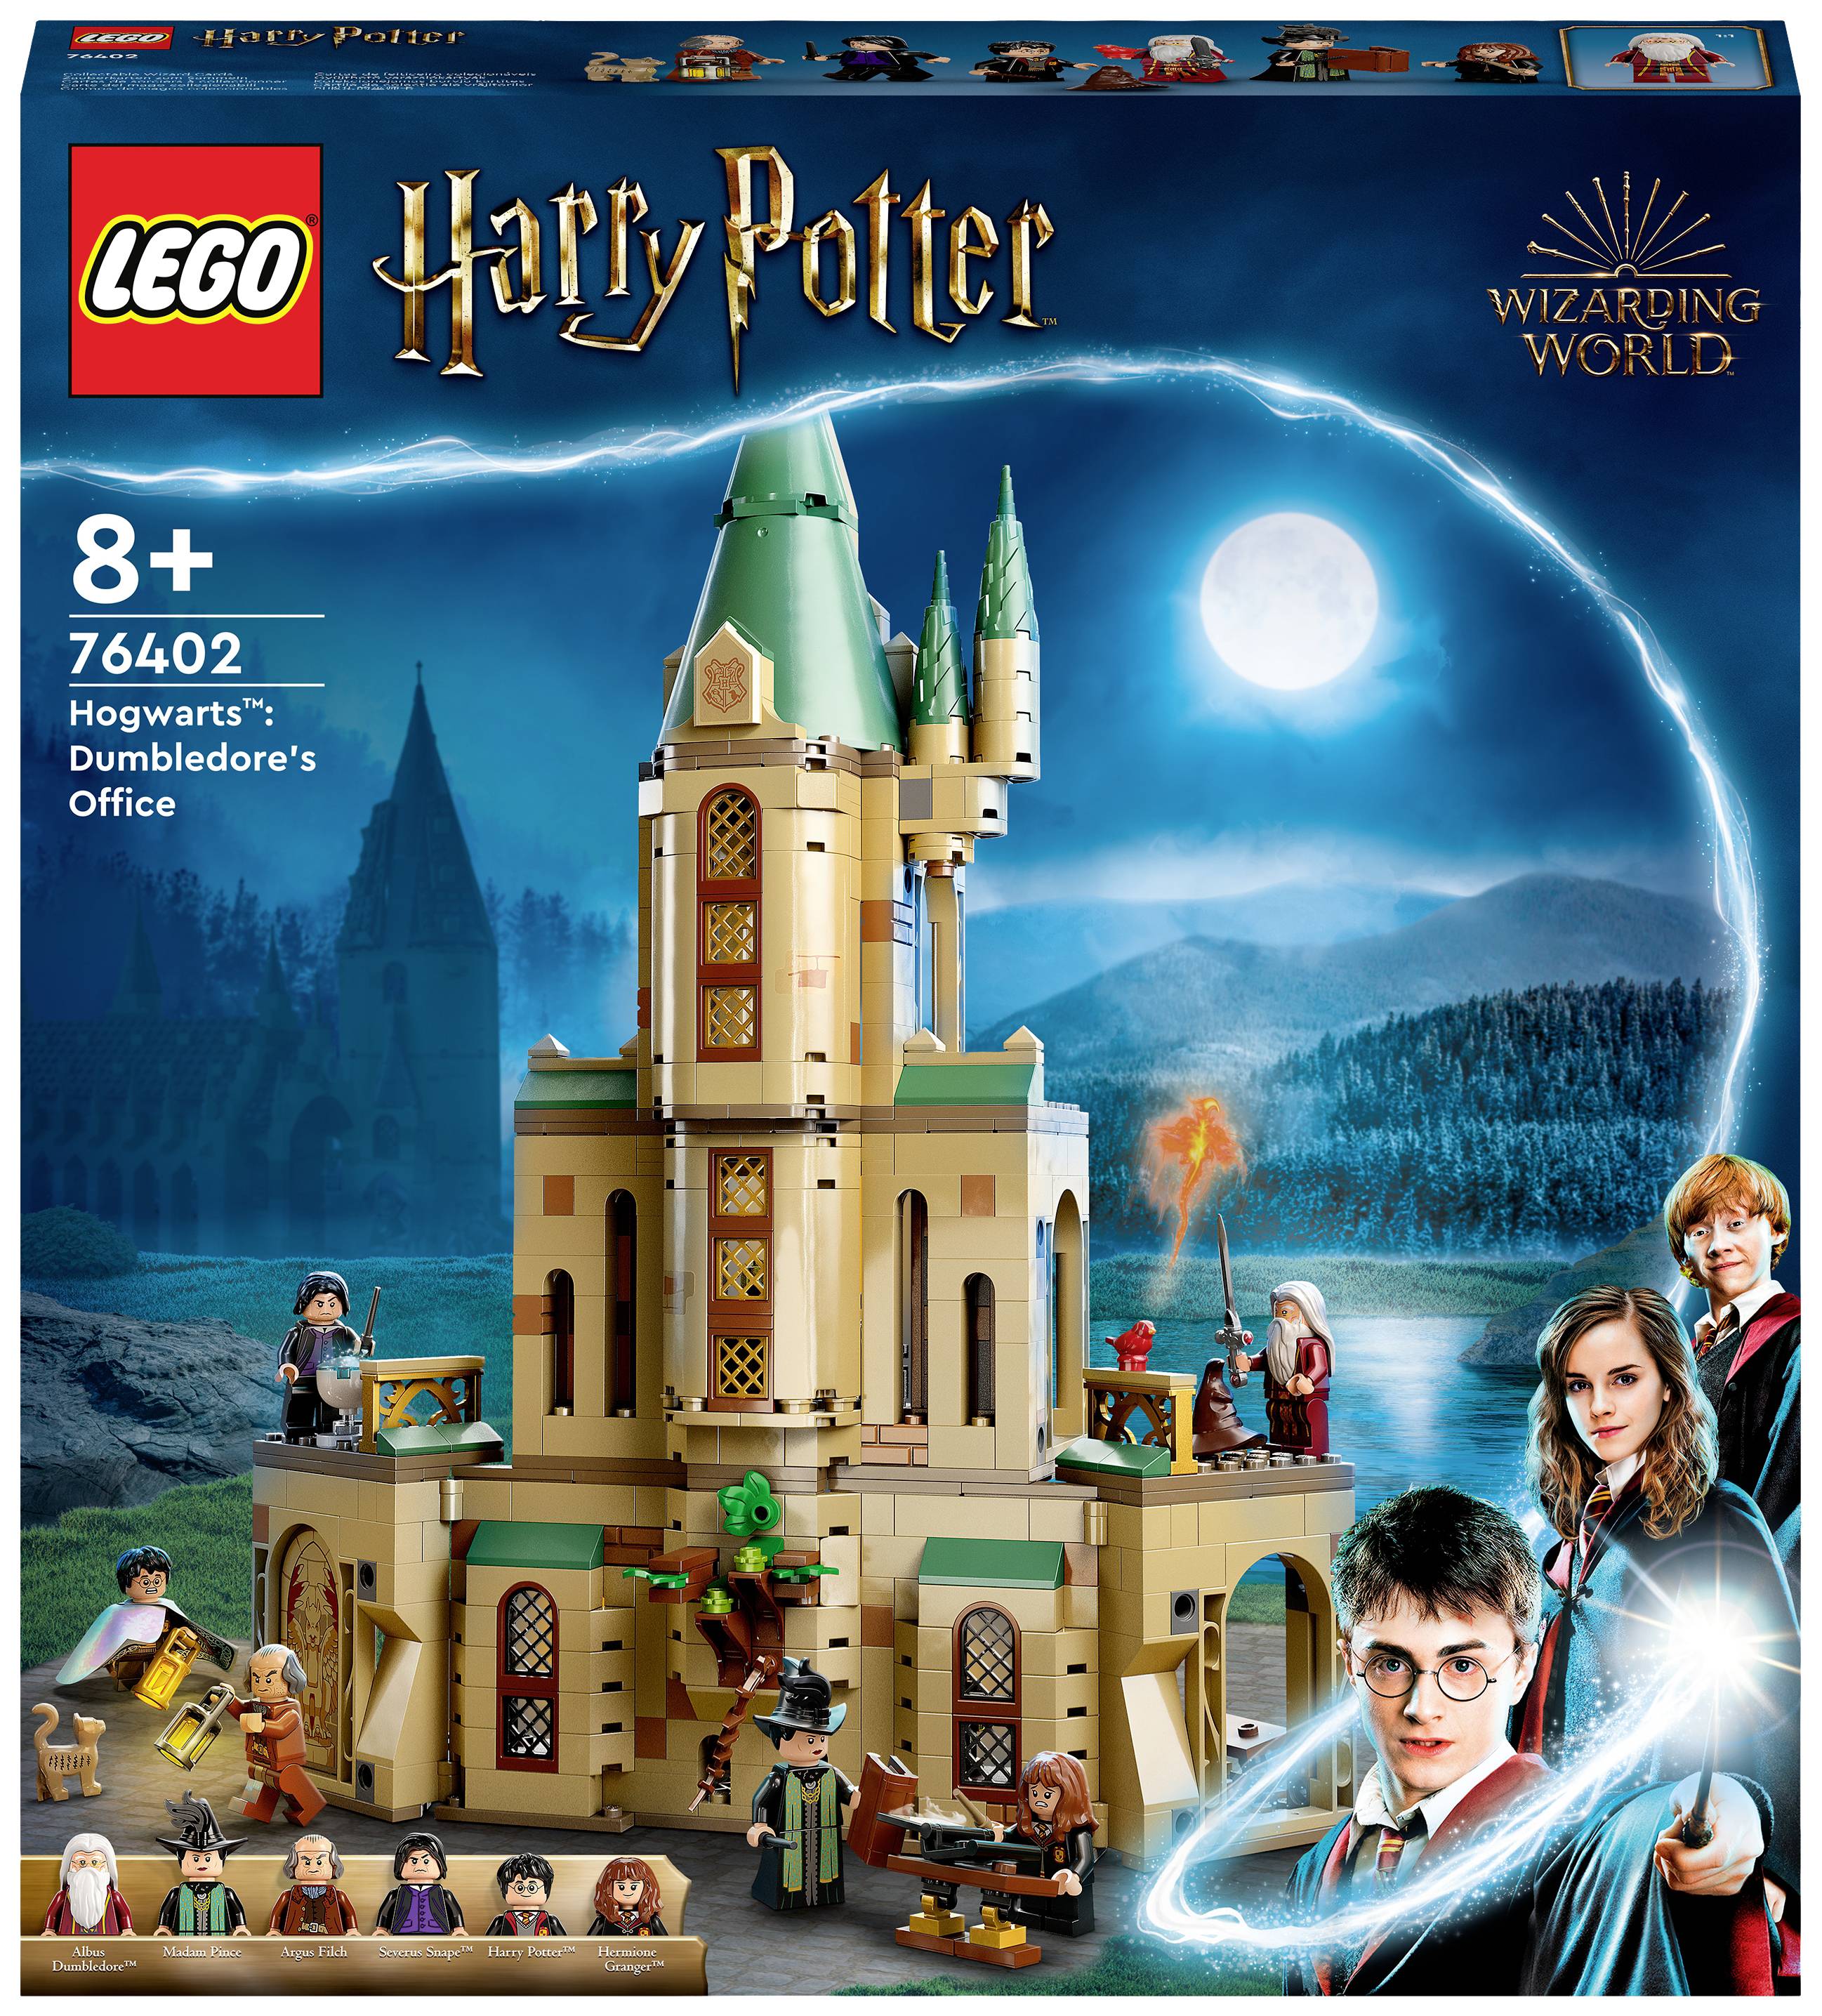 LEGO HARRY POTTER Hogwarts Dumbledore's office76402